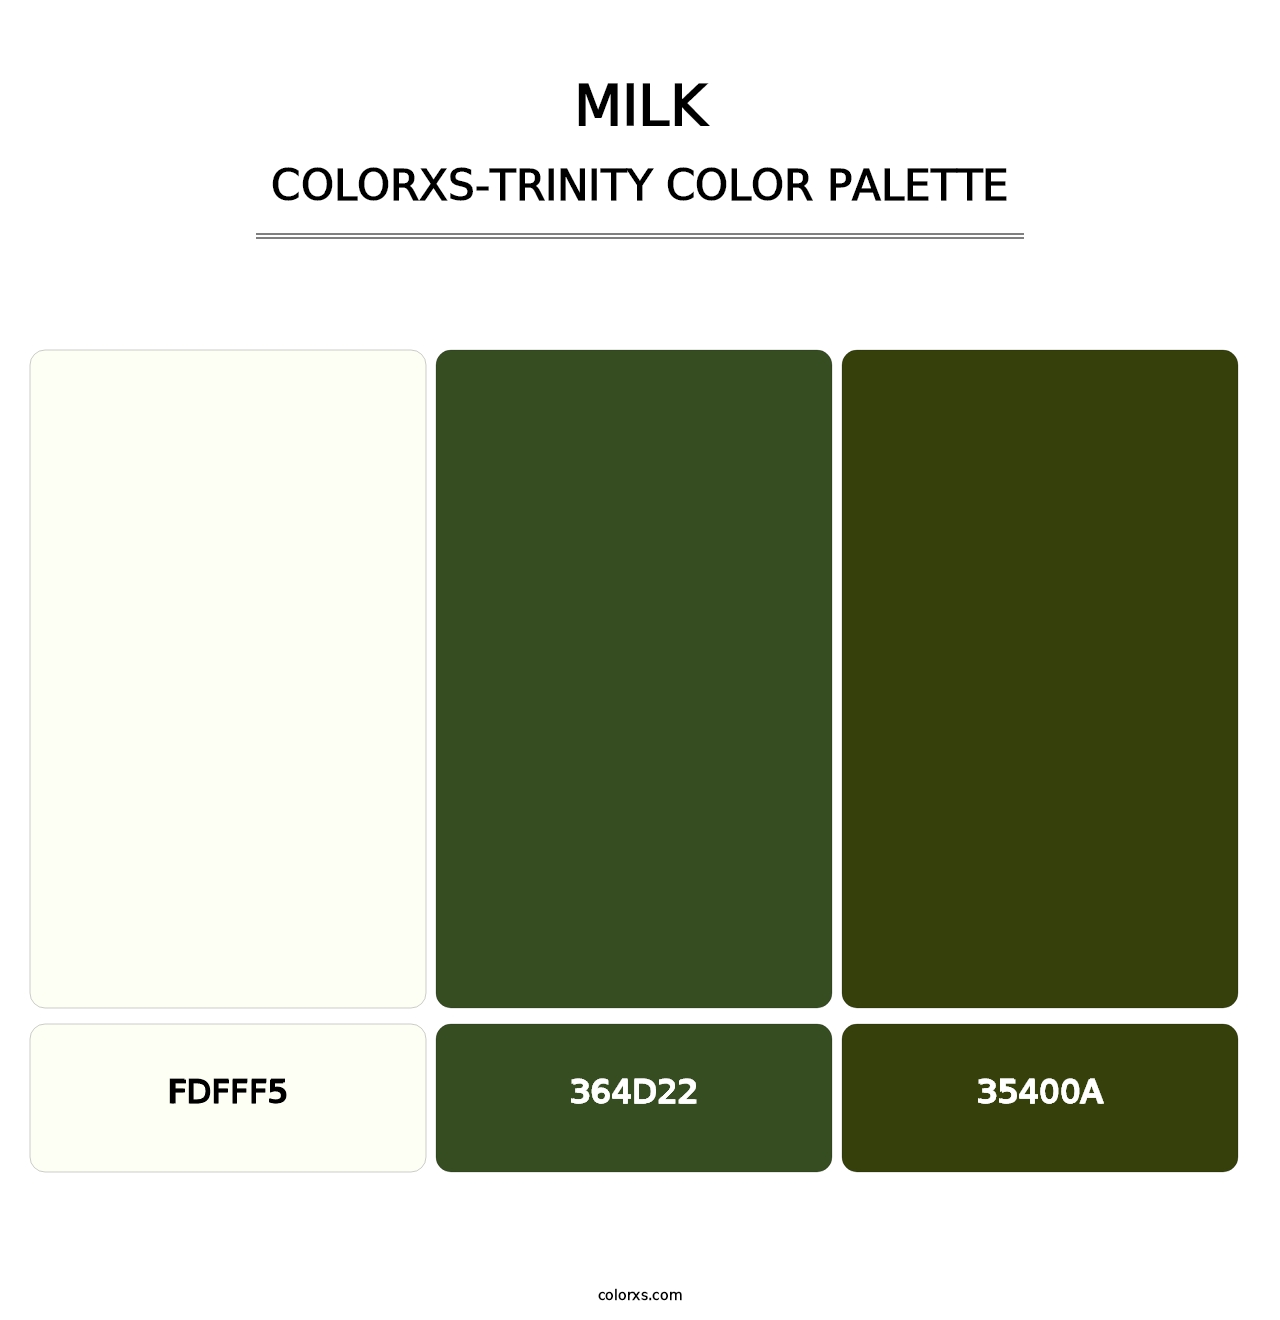 Milk - Colorxs Trinity Palette